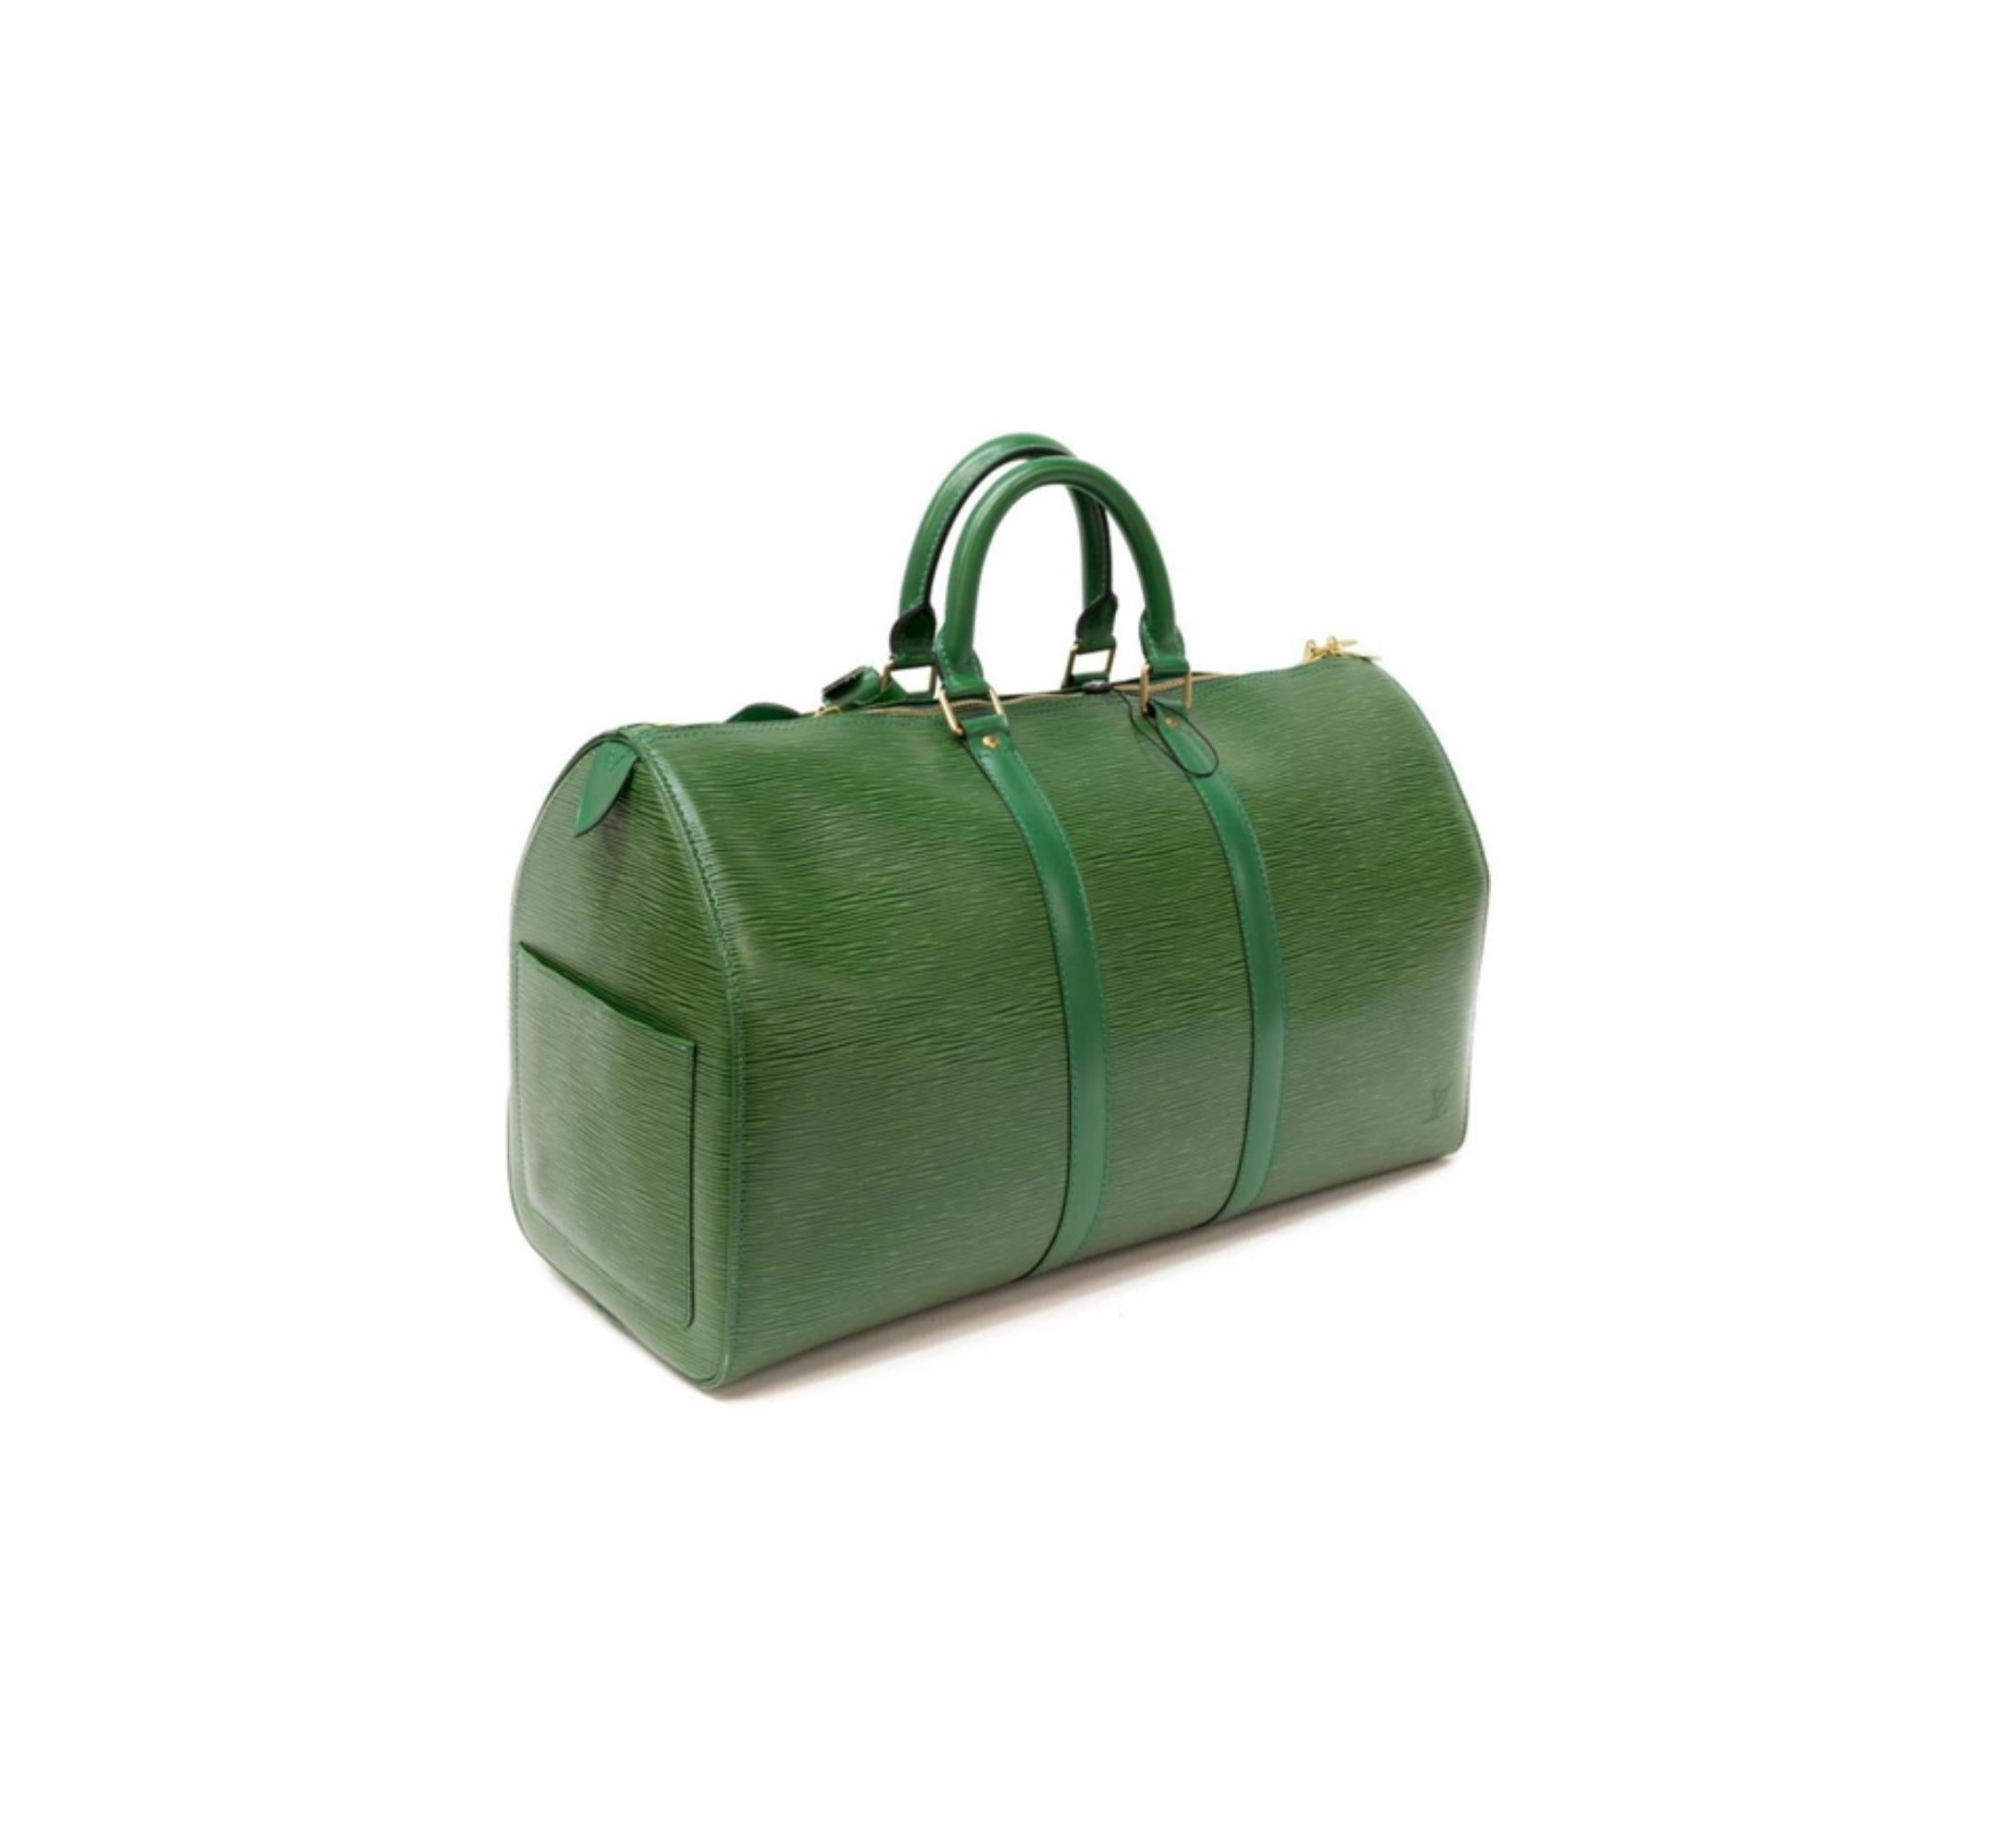 Louis Vuitton Green Epi Leather Borneo Keepall 45 Duffle Bag 853599
Width (inch) : 17.7 inch(approx)
Width (cm) : 45 cm(approx)
Height (inch) : 10.6 inch(approx)
Height (cm) : 27 cm(approx)
Depth (inch) : 7.87 inch(approx)
Depth (cm) : 20